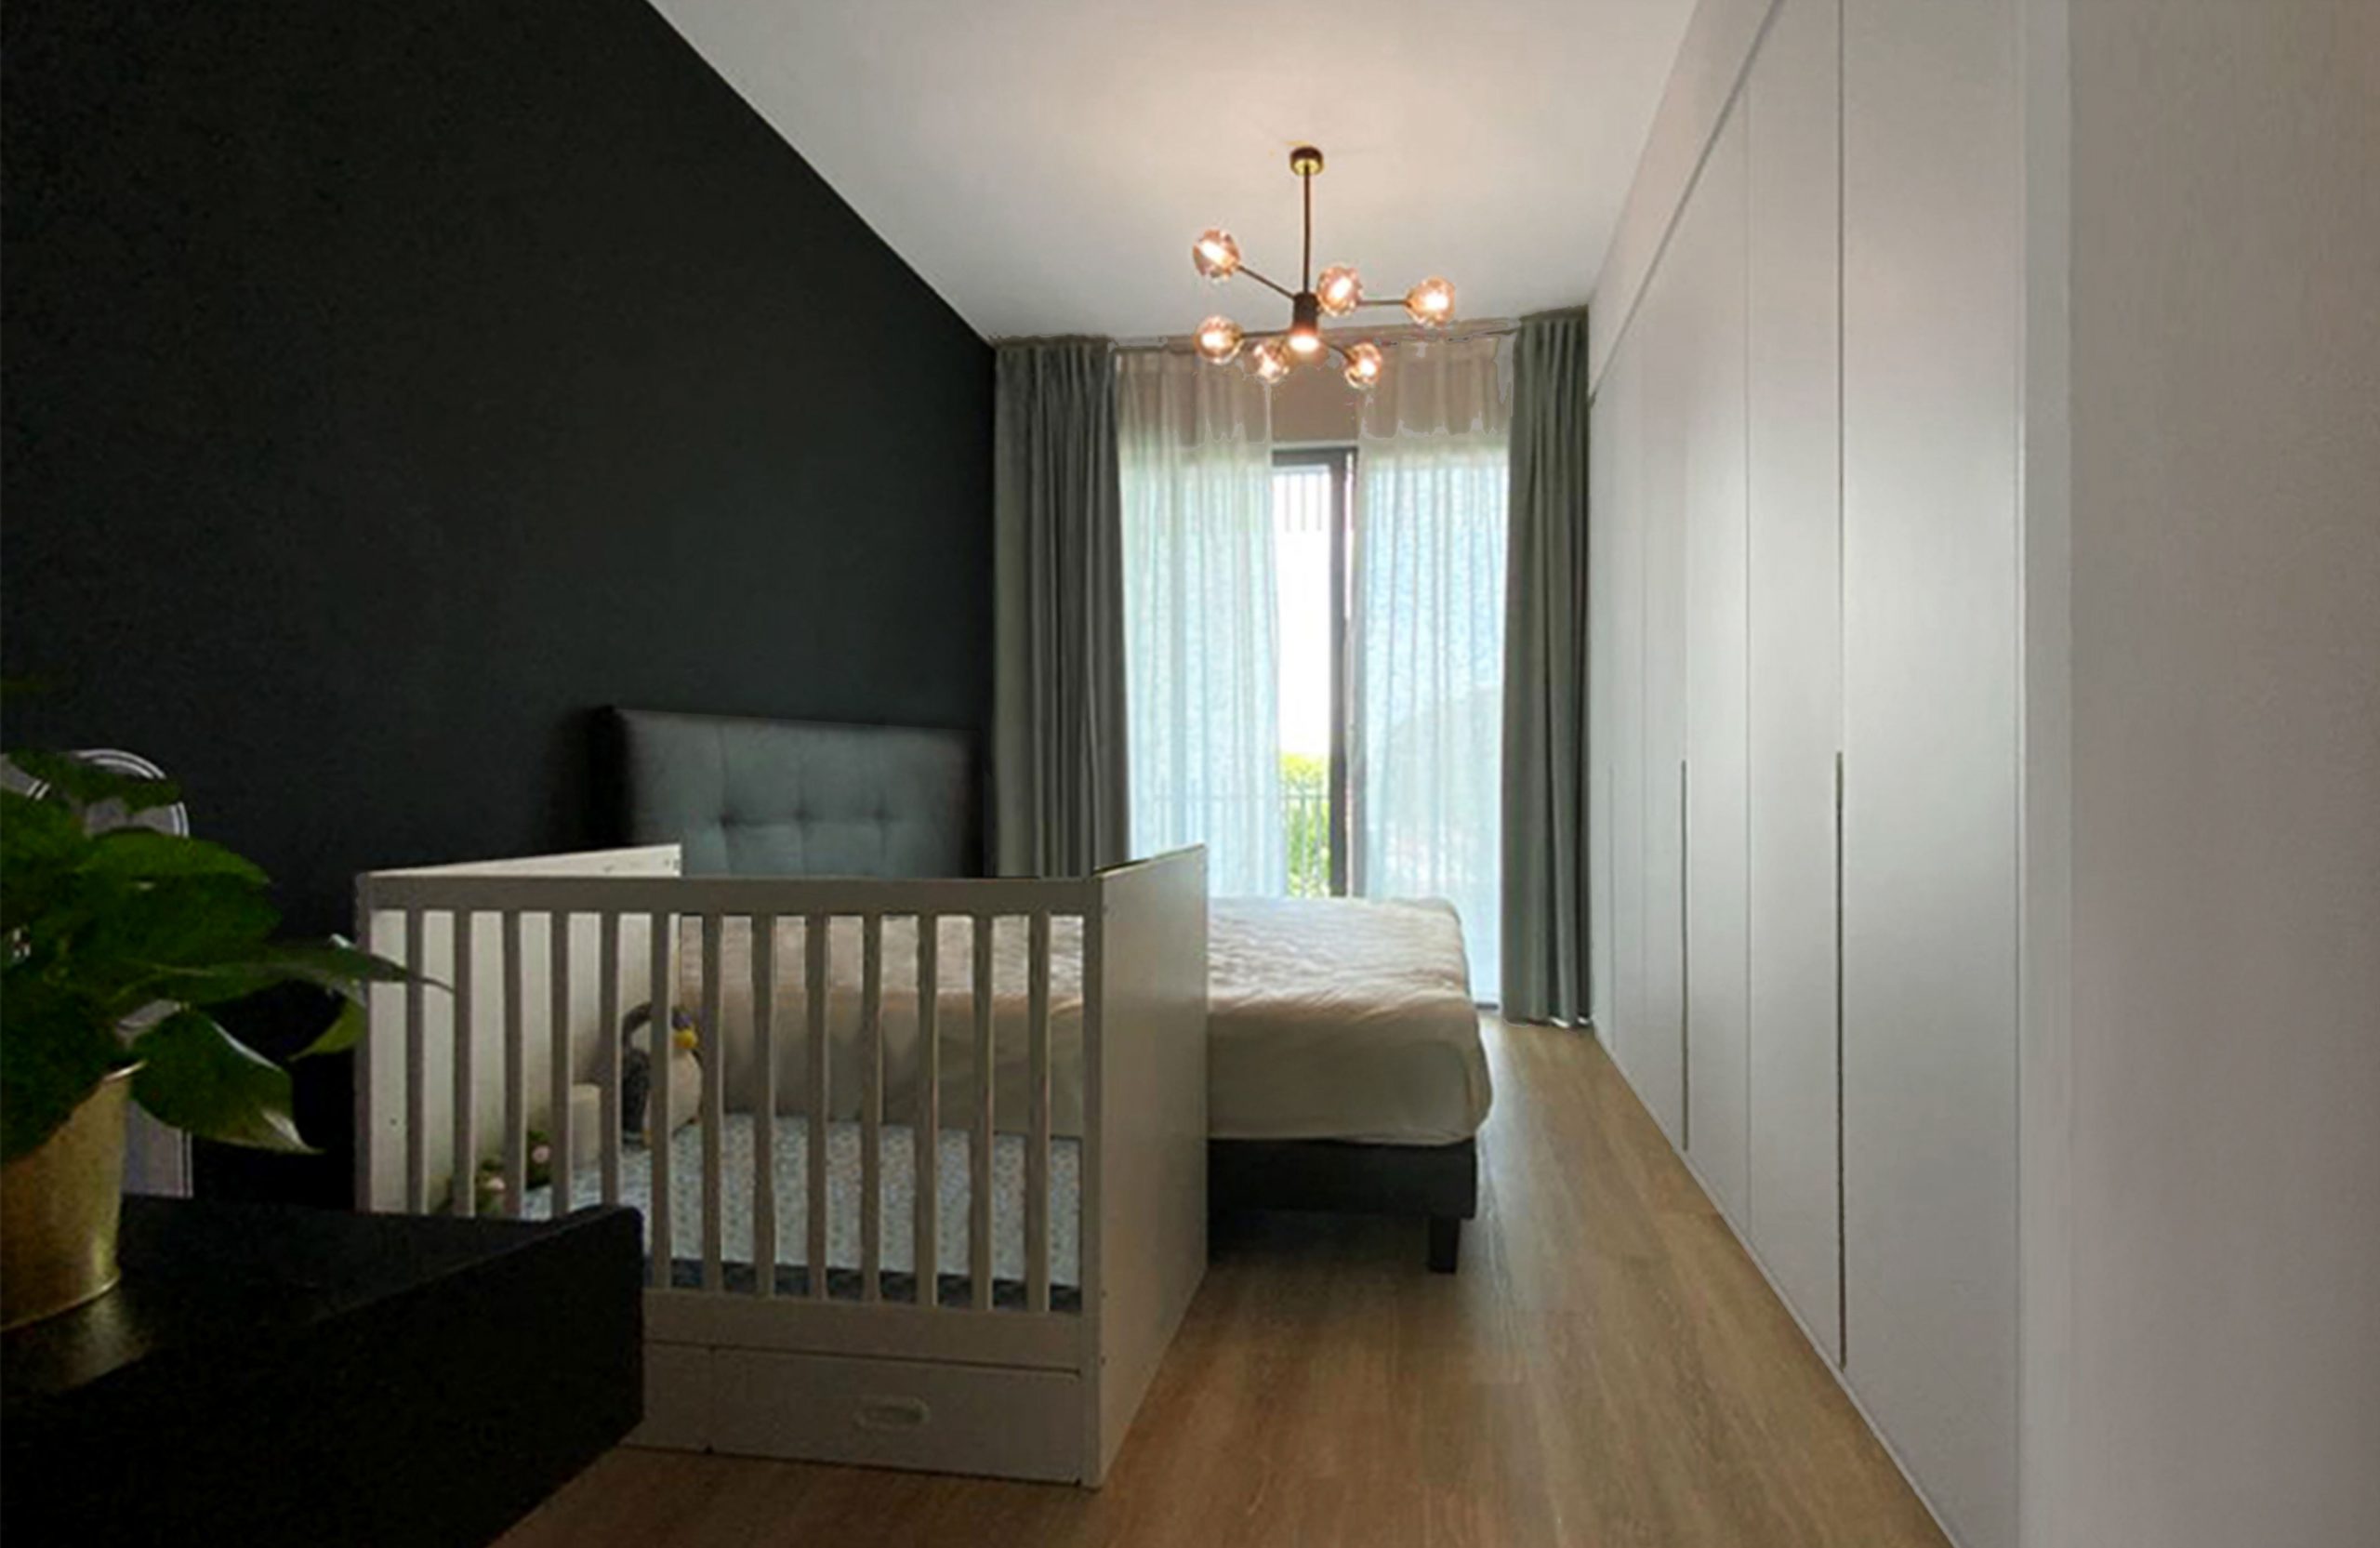 Hundred Trees Condo Master Bedroom Modern Contemporary Interior Design Black Wall with Custom Full Height Wardrobe